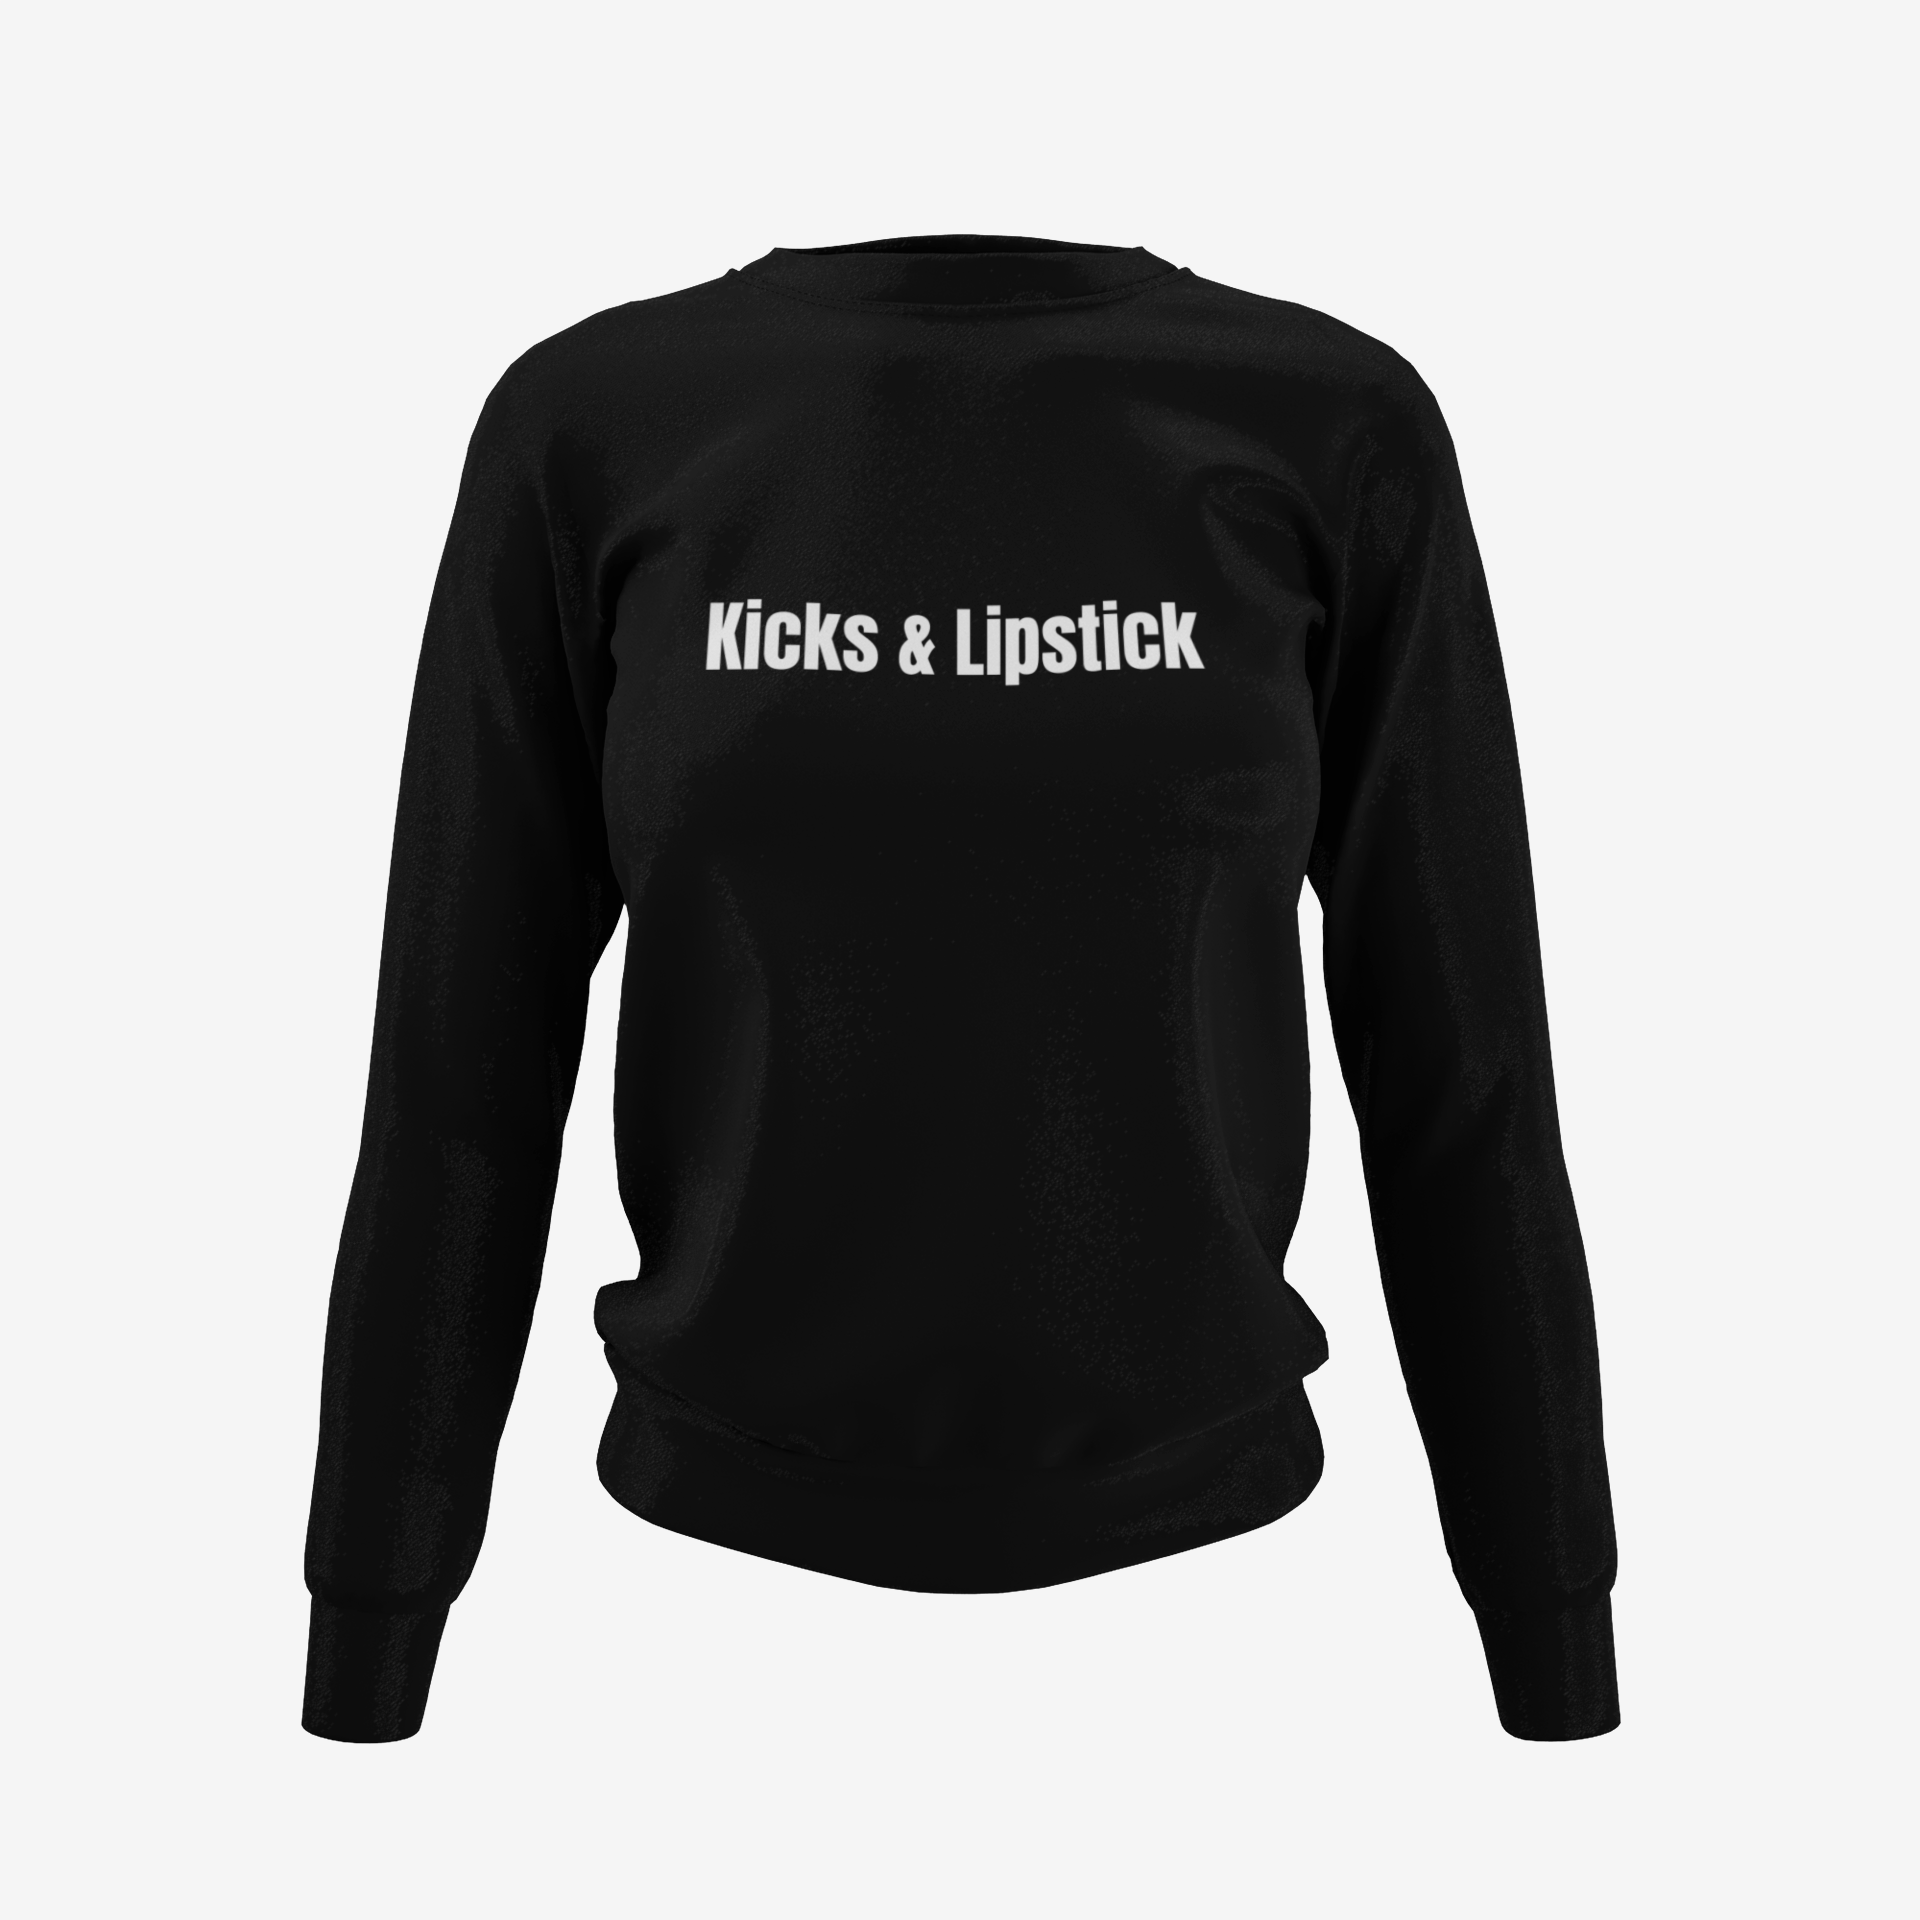 Kicks & Lipstick Sweatshirt